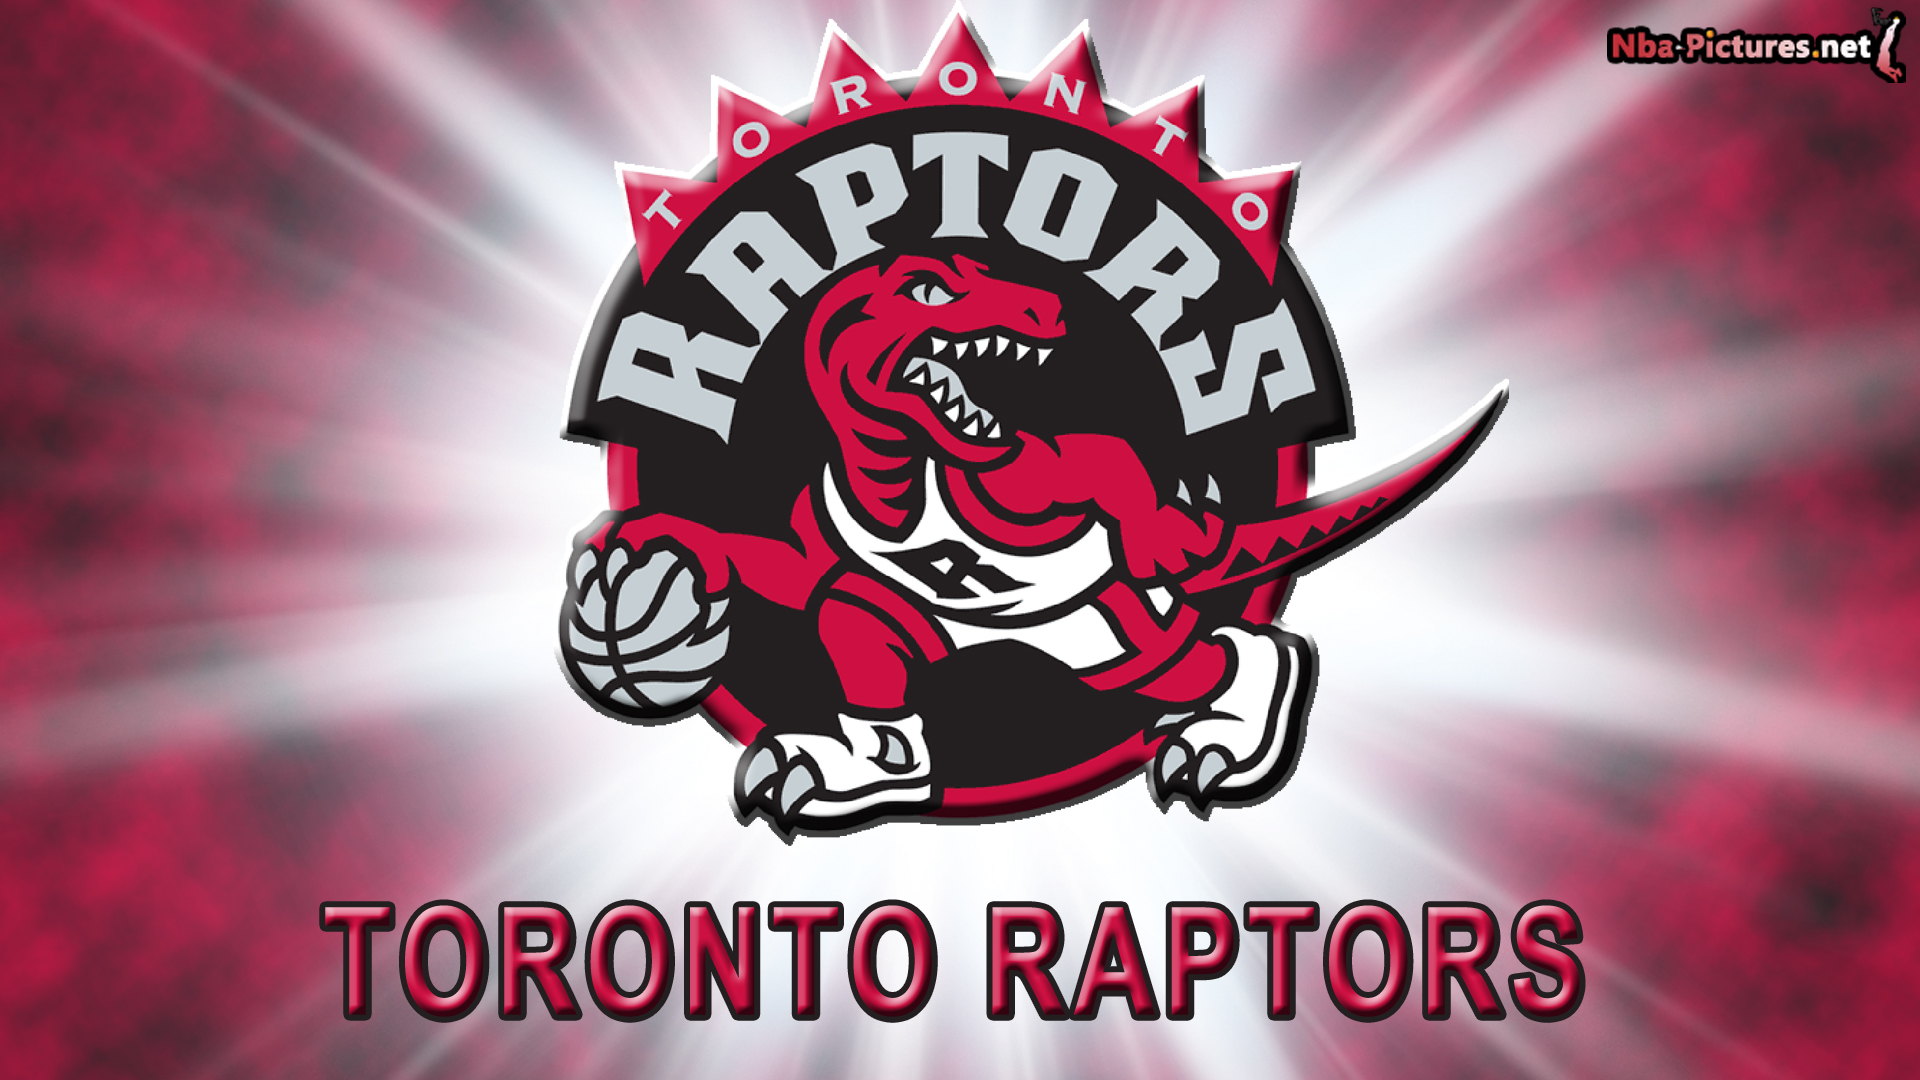 Toronto Raptors scores